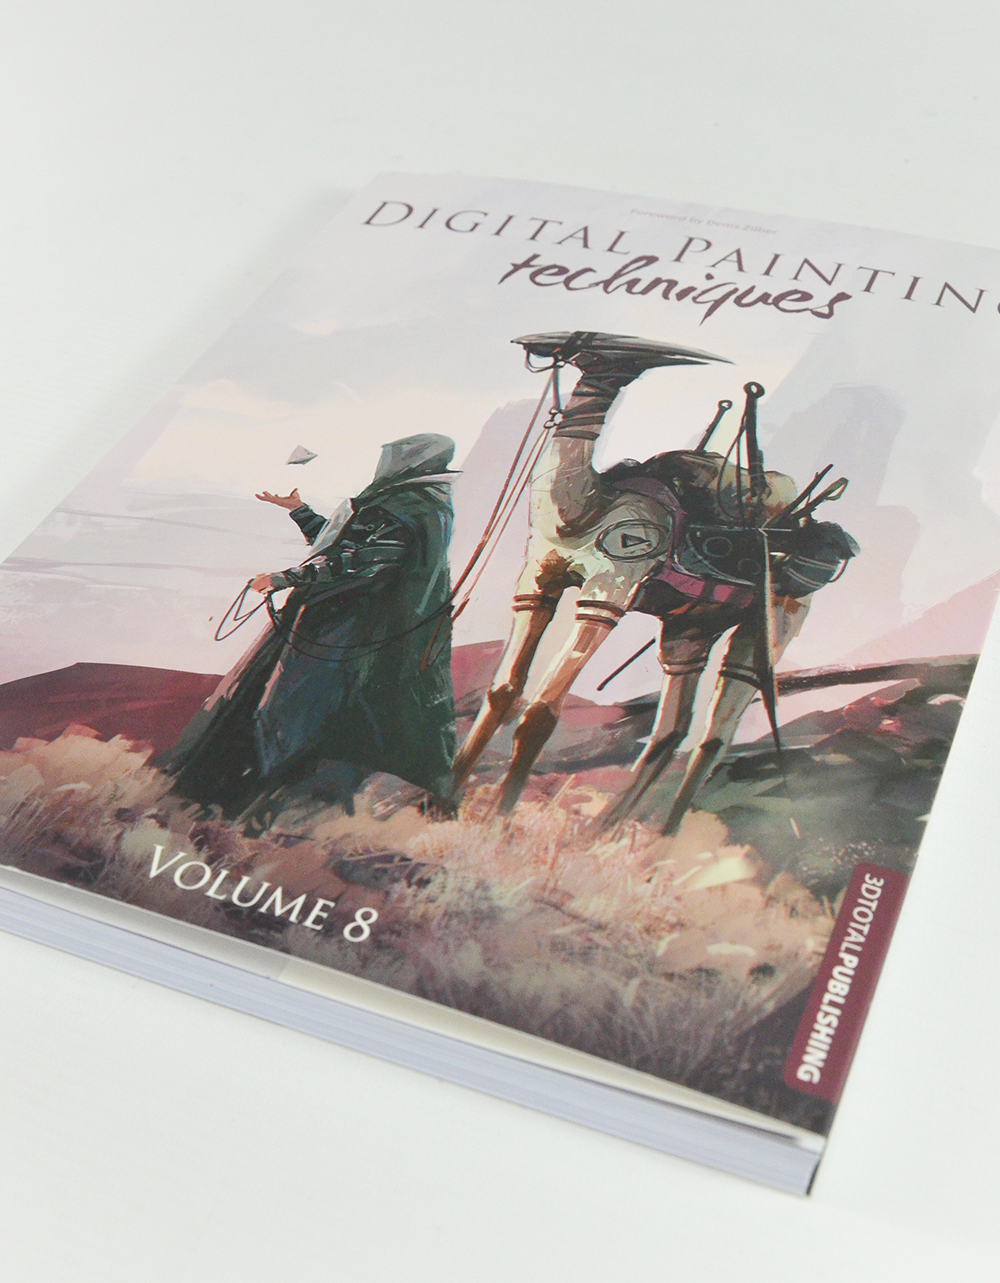 Digital Painting Techniques: Volume 8 (Downloadable Edition)